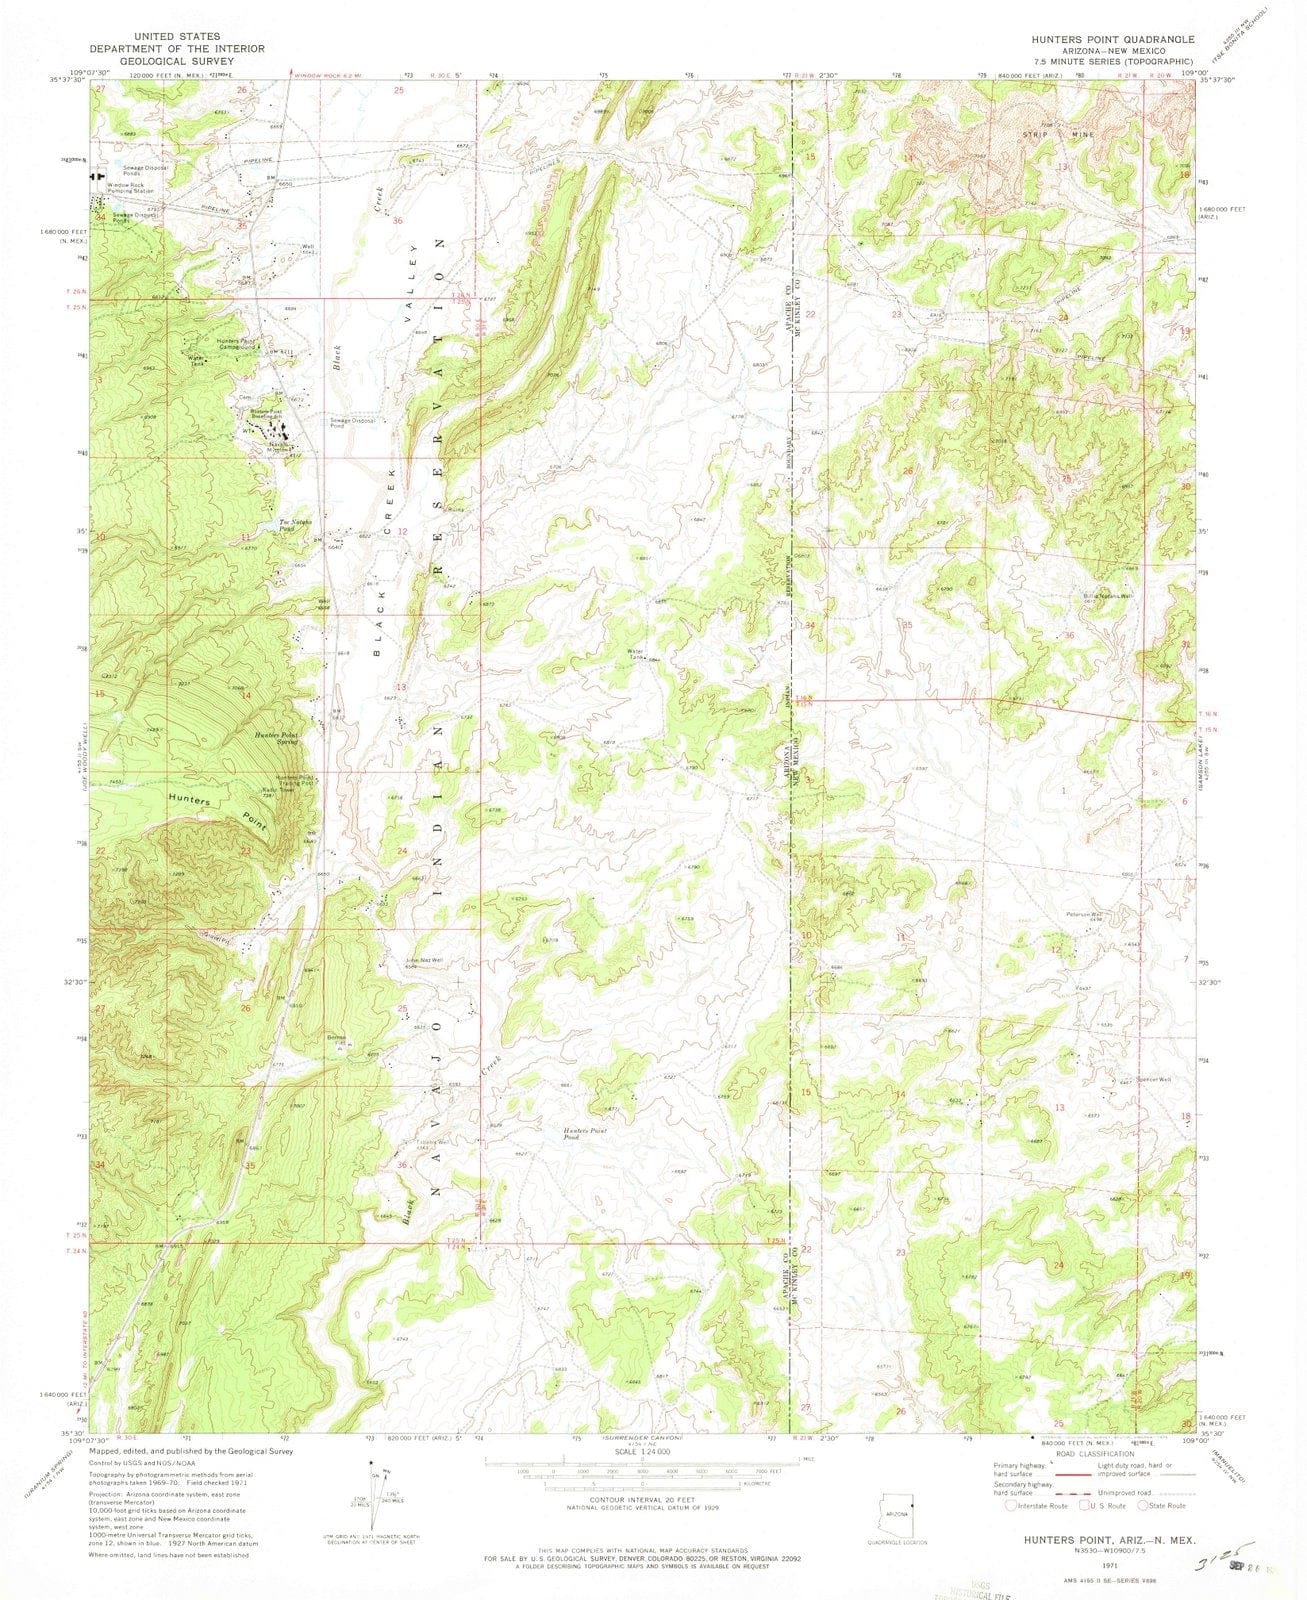 1971 Hunters Point, AZ - Arizona - USGS Topographic Map